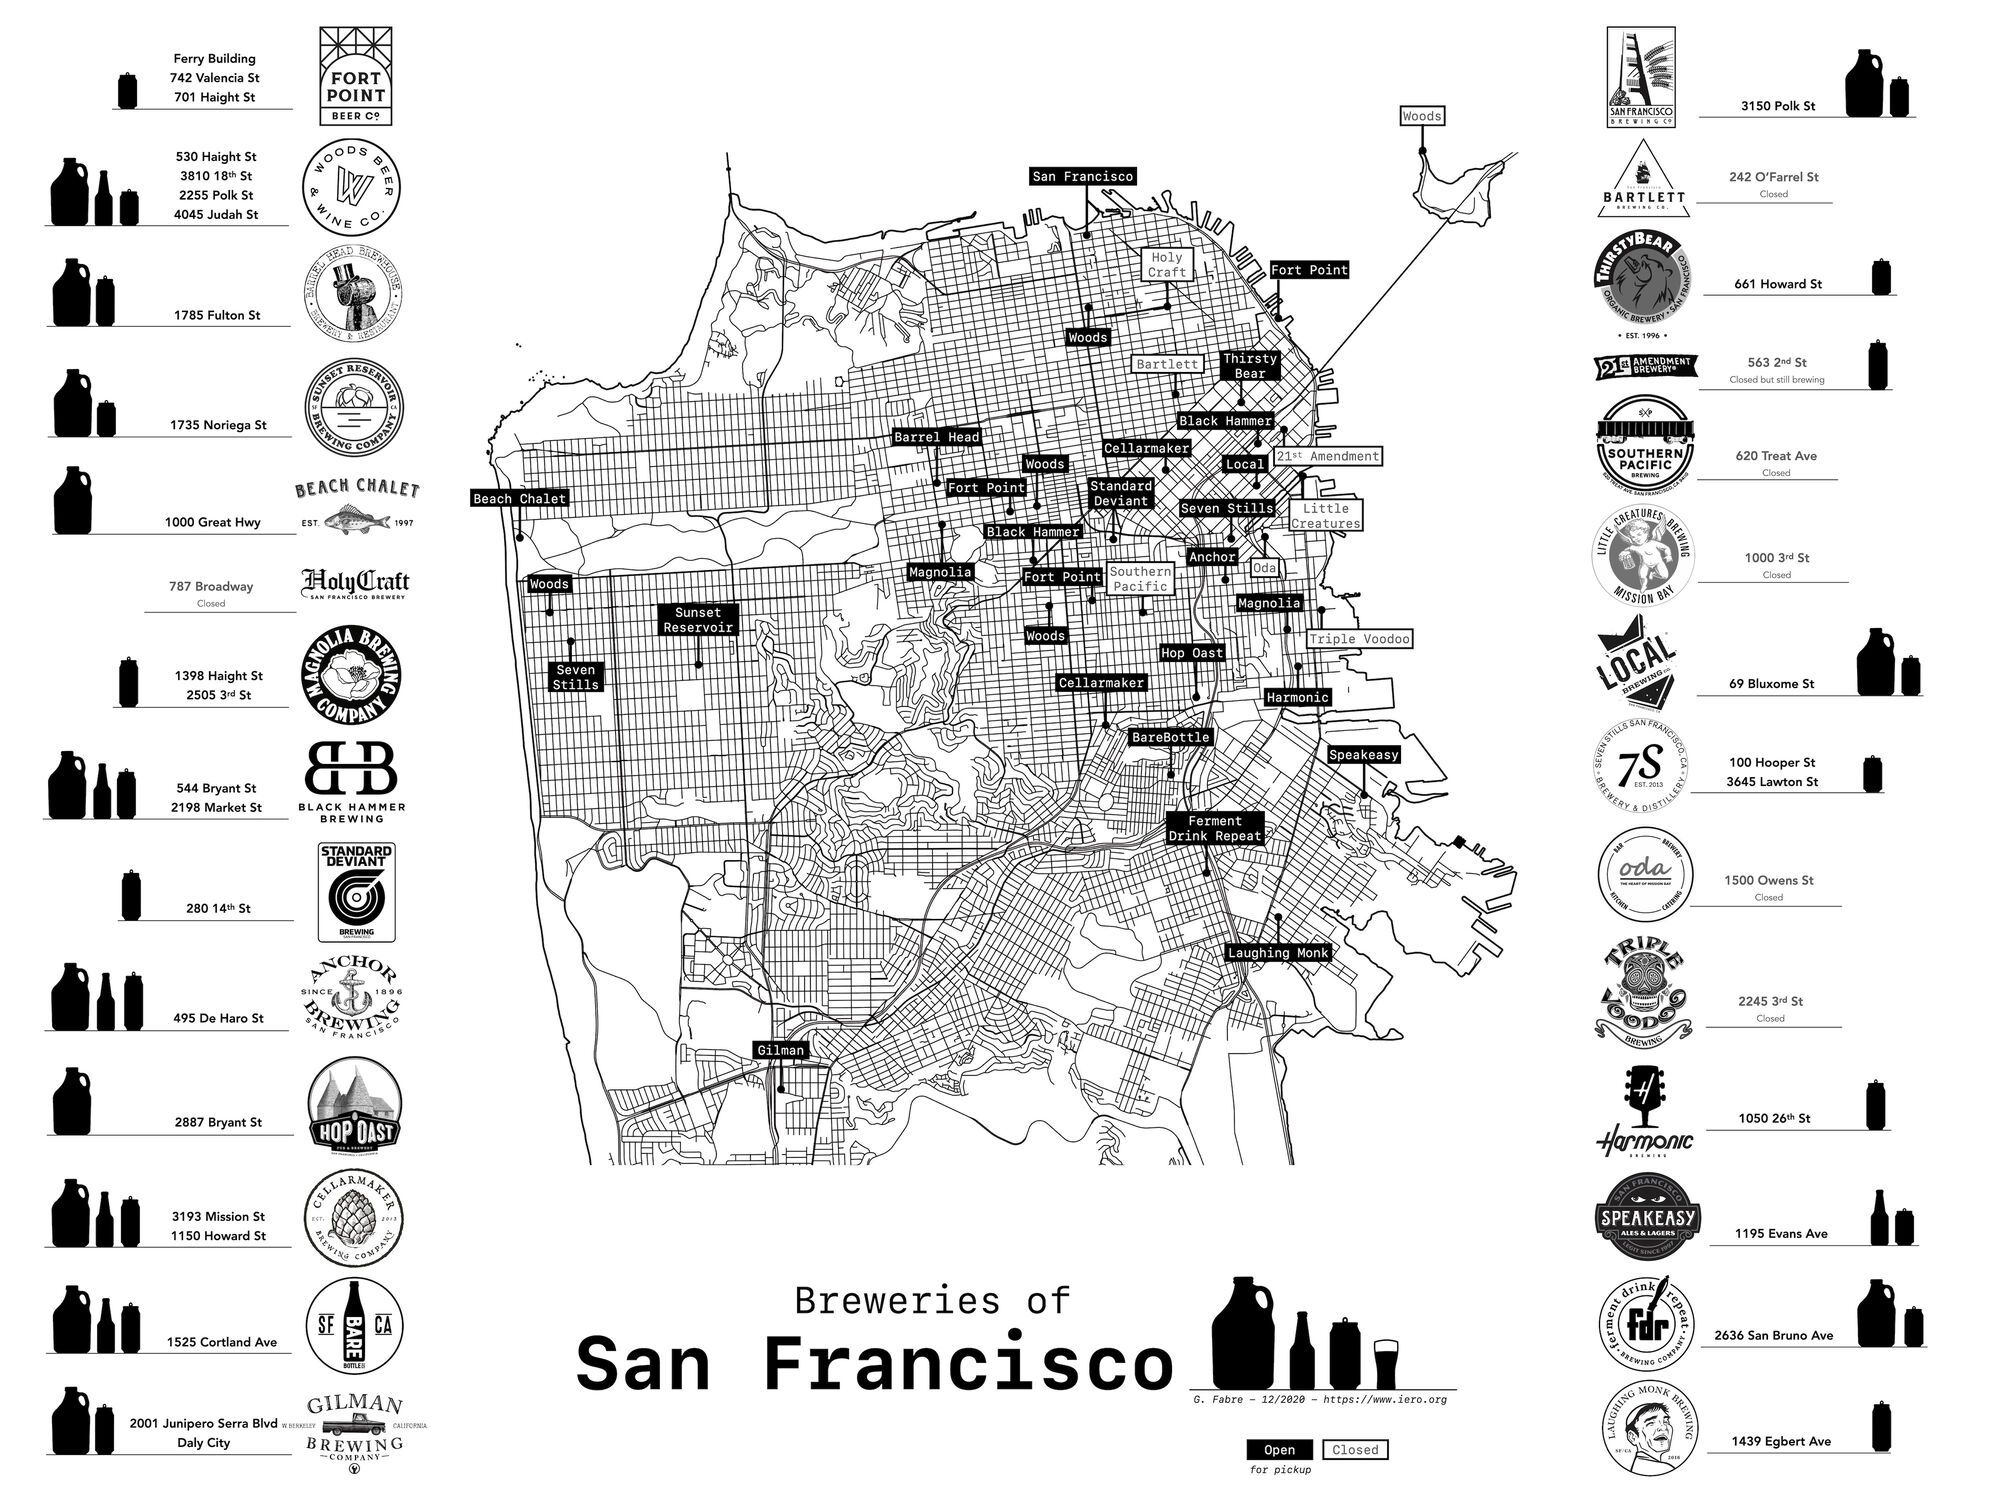 Brasseries de San Francisco